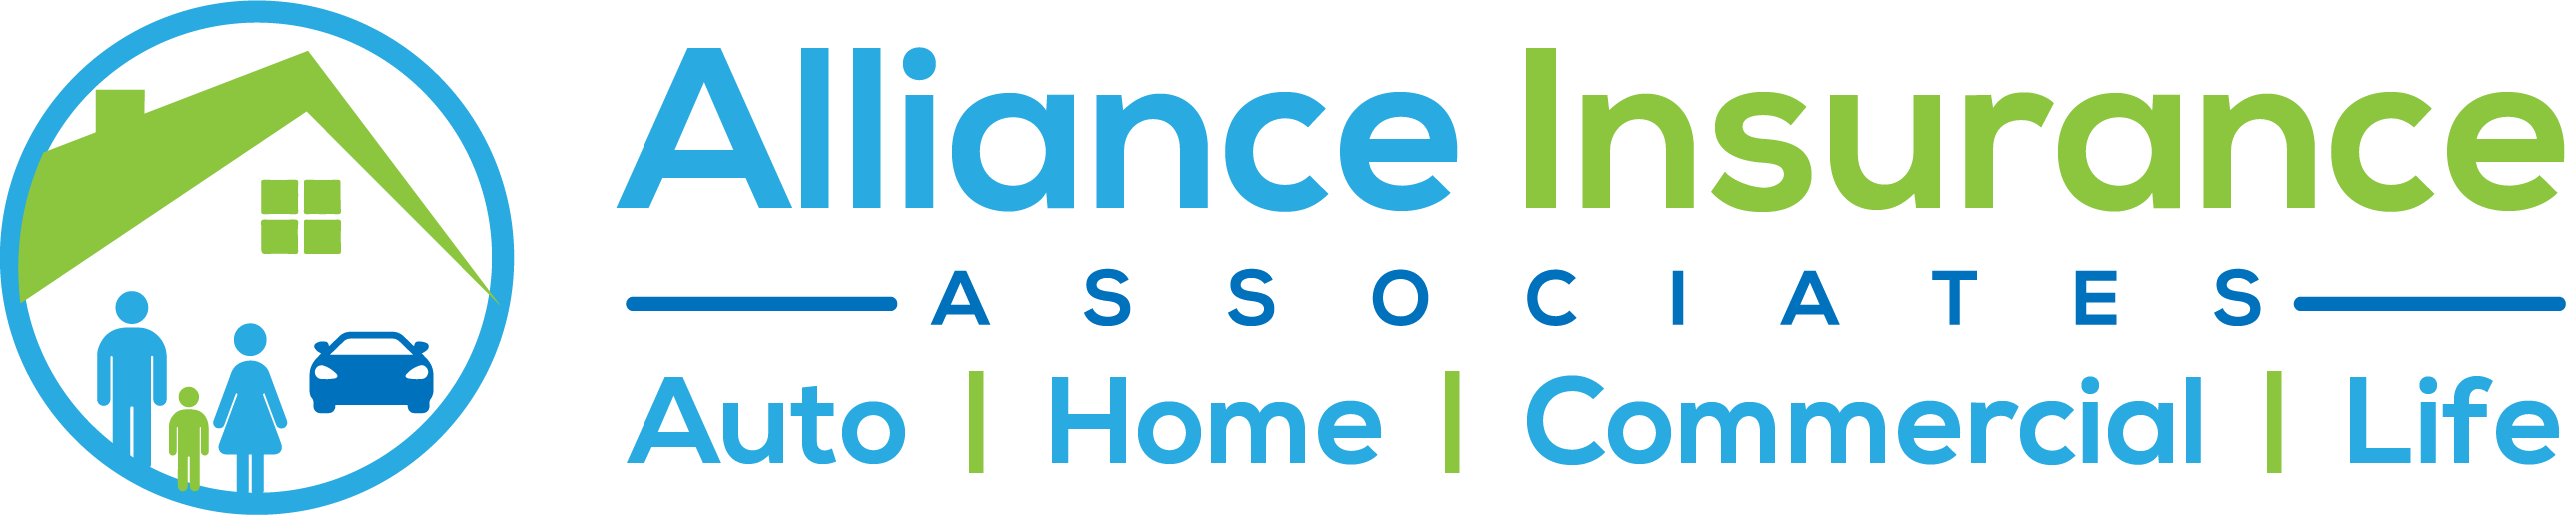 alliance-insurance-logo